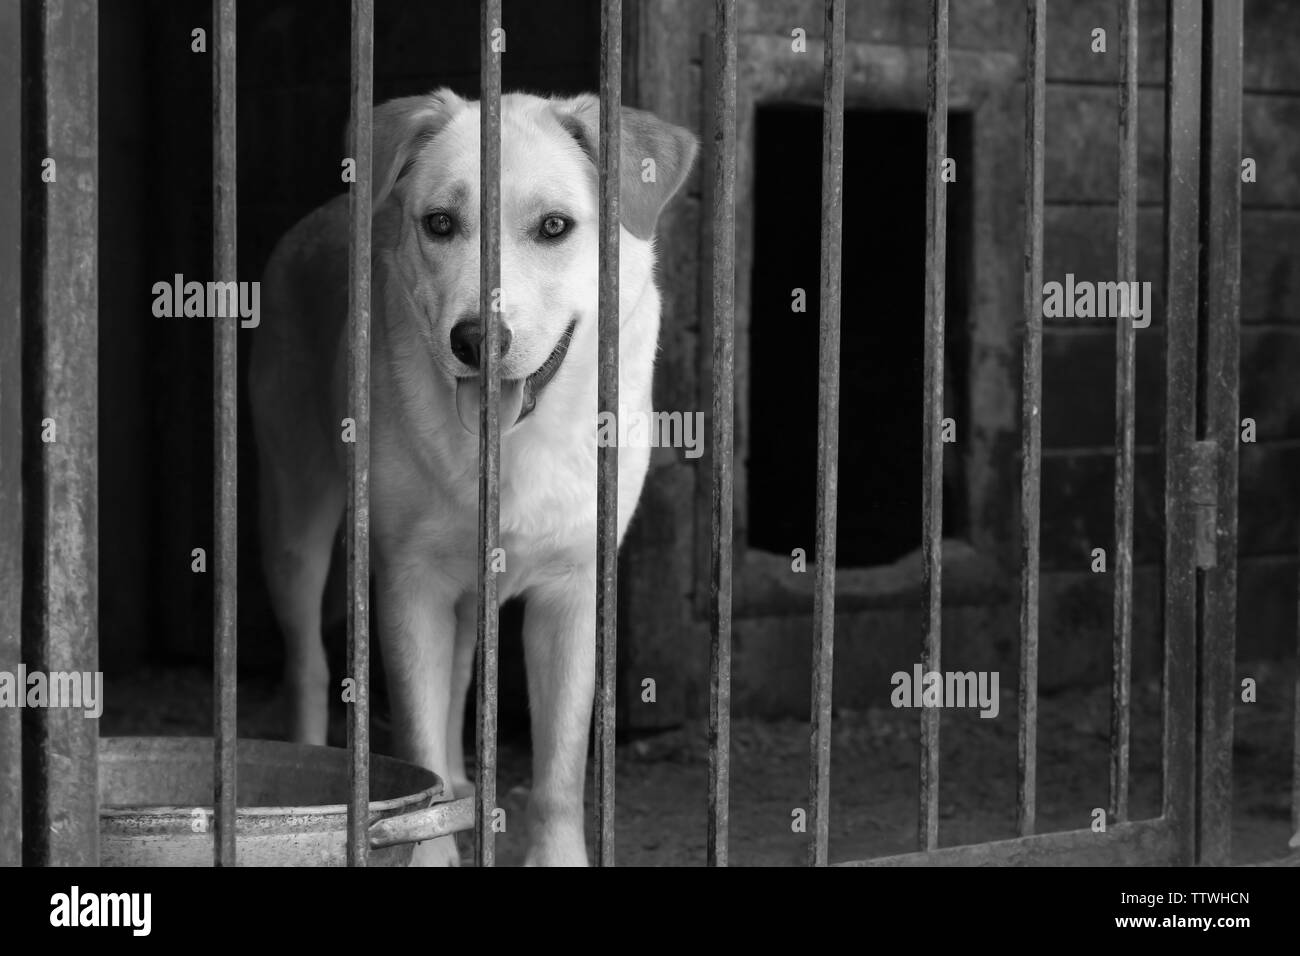 Dog bowl Black and White Stock Photos & Images - Alamy